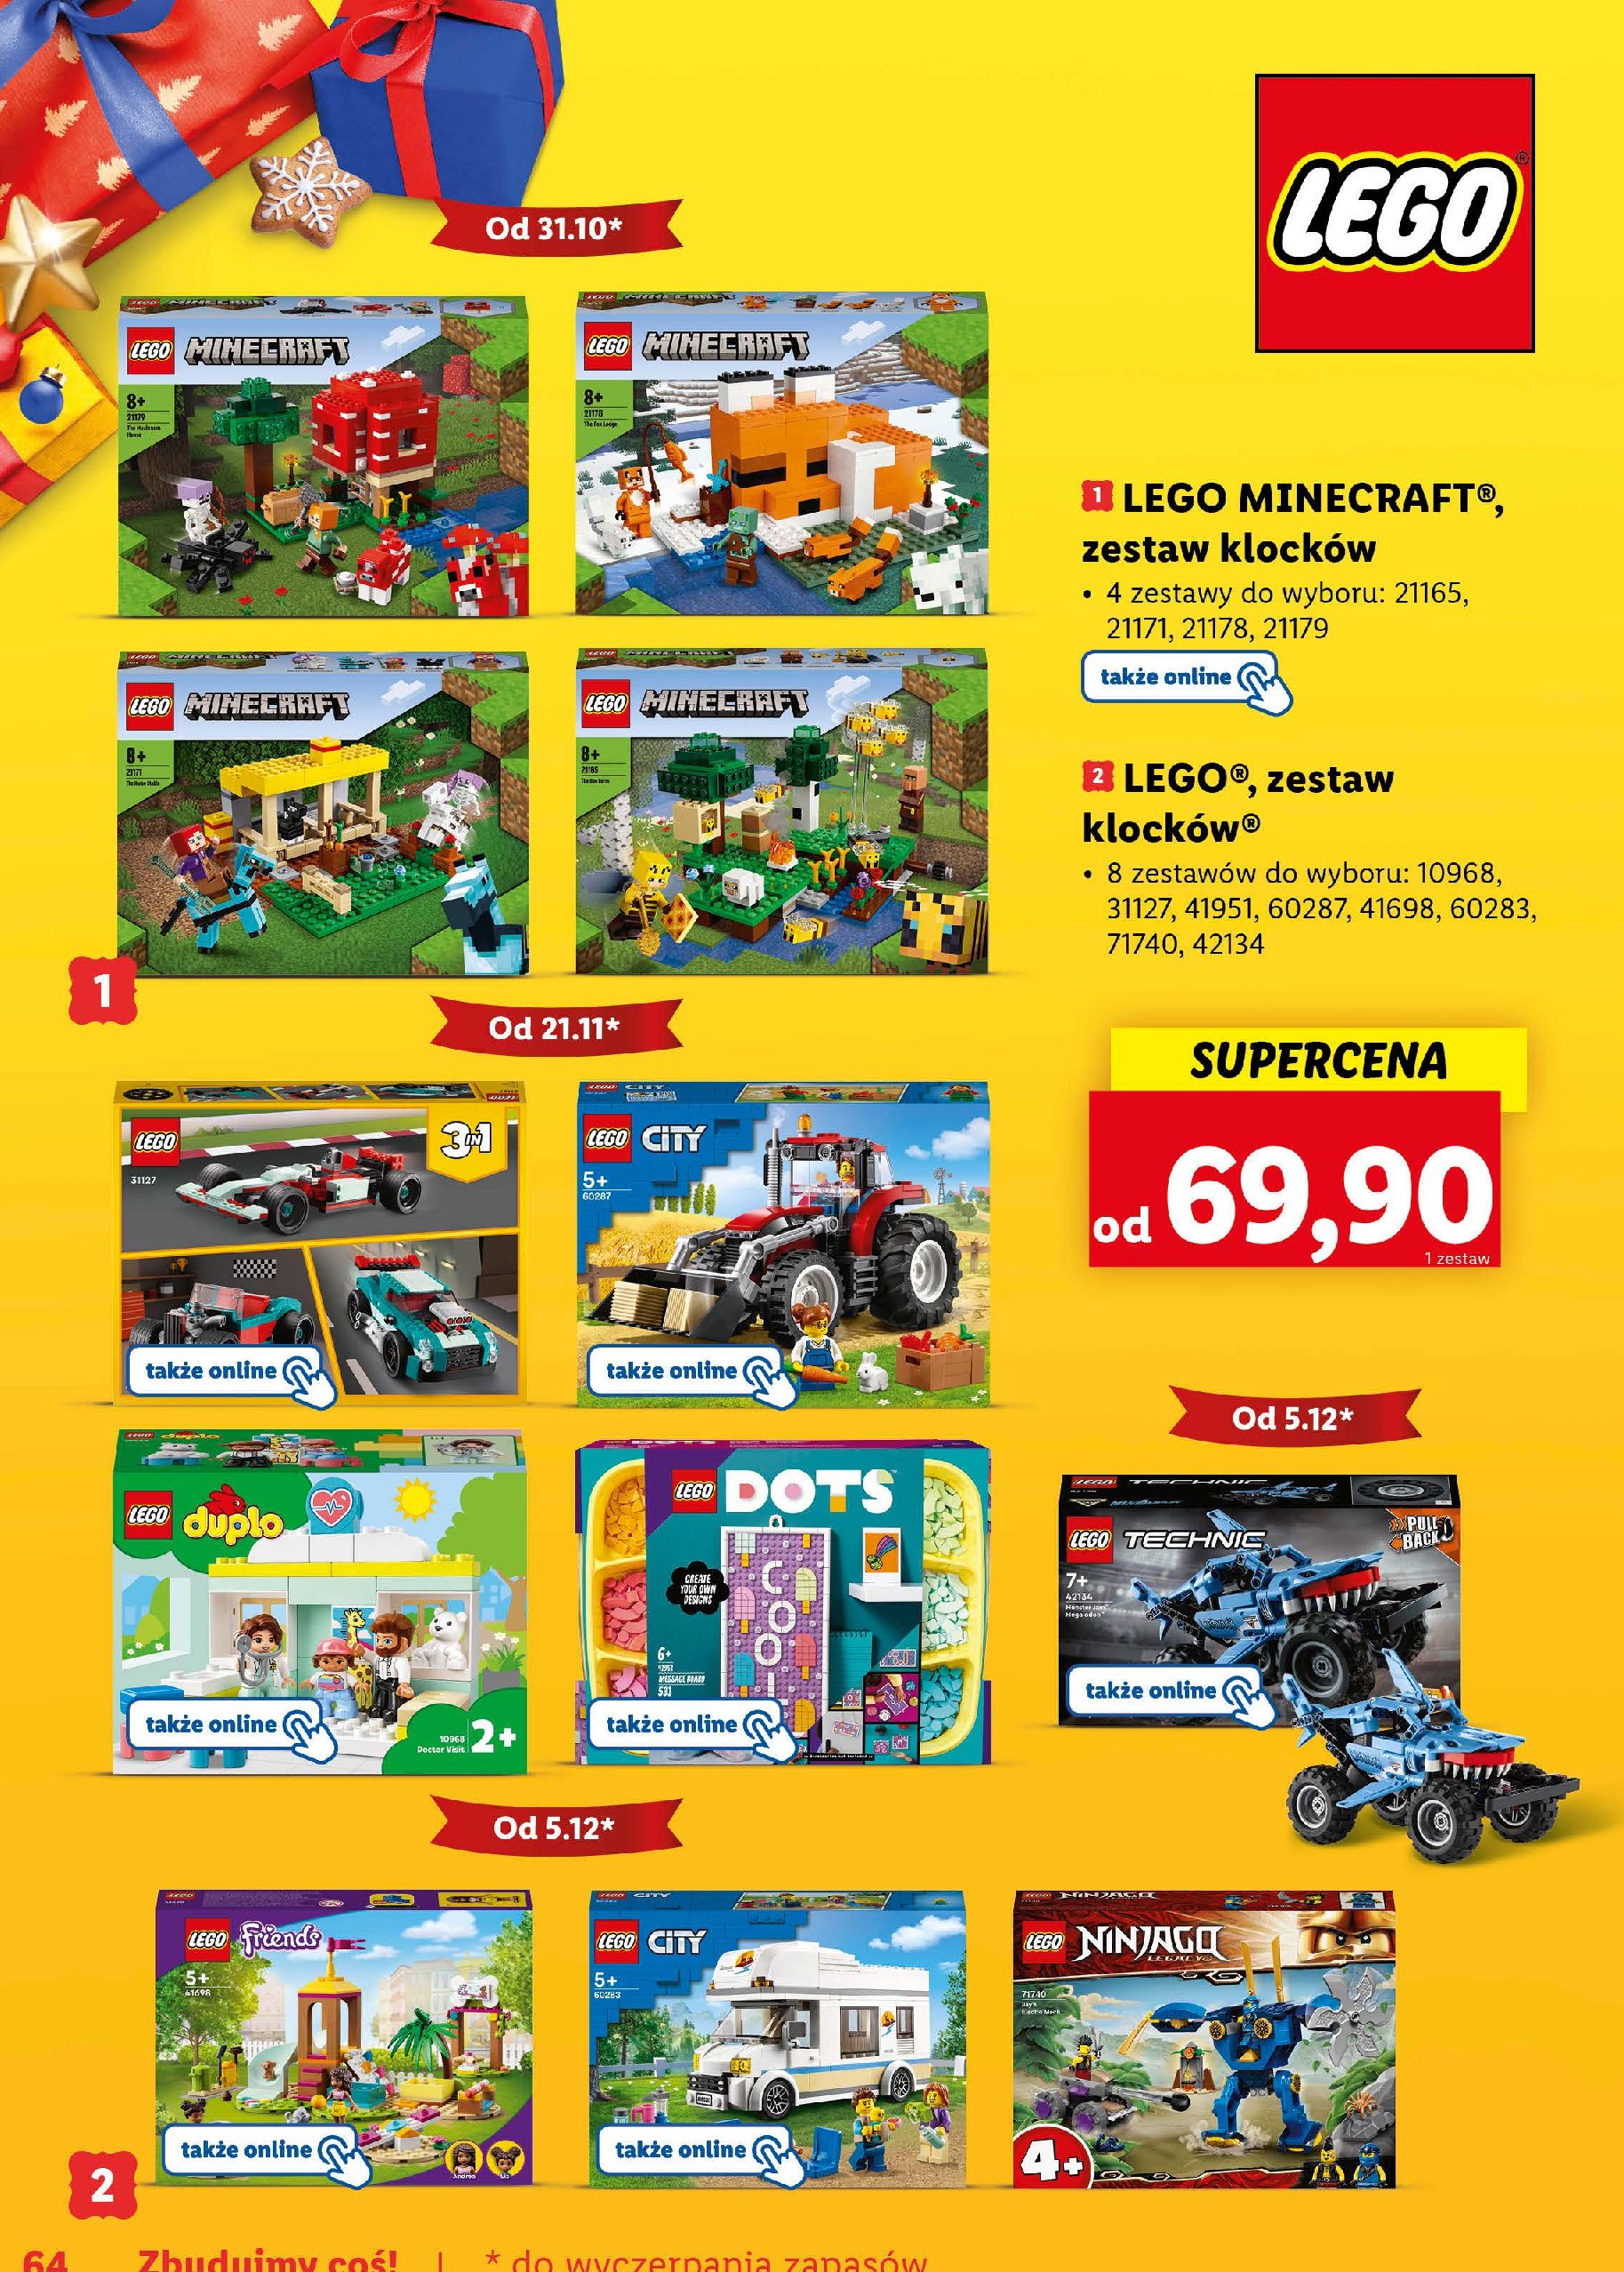 Klocki 60283 Lego city promocja